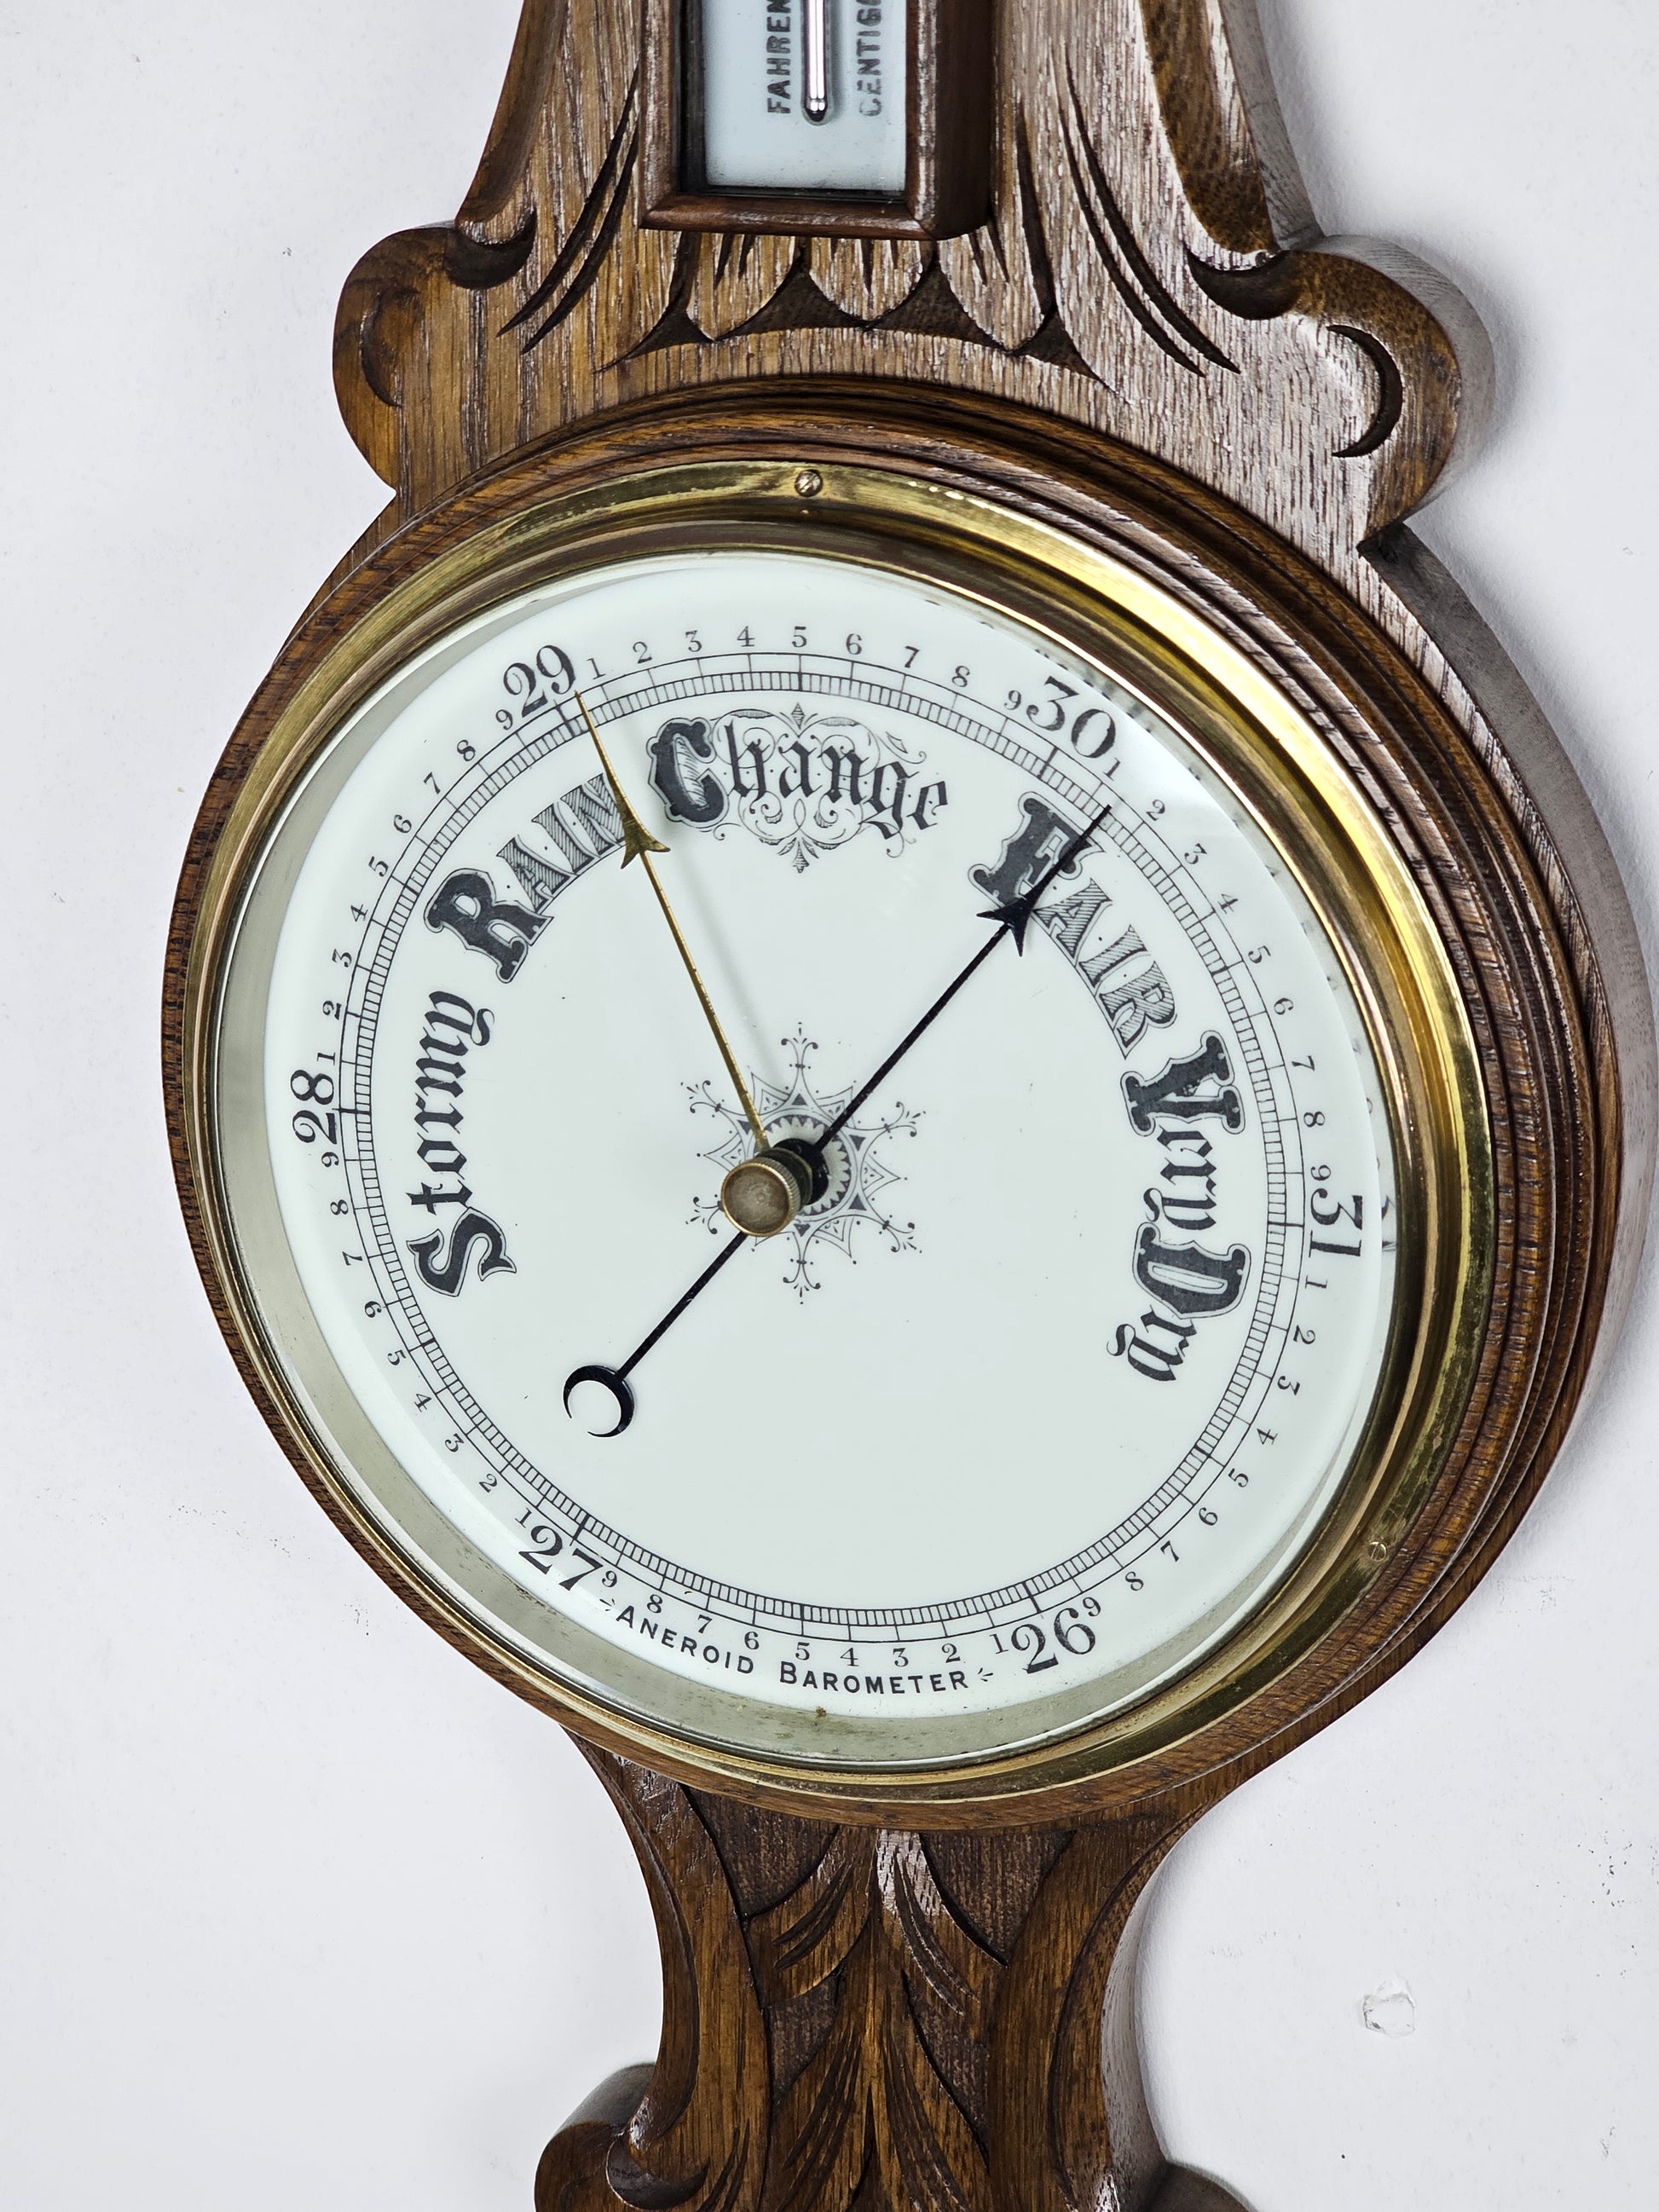 19th century aneroid barometer